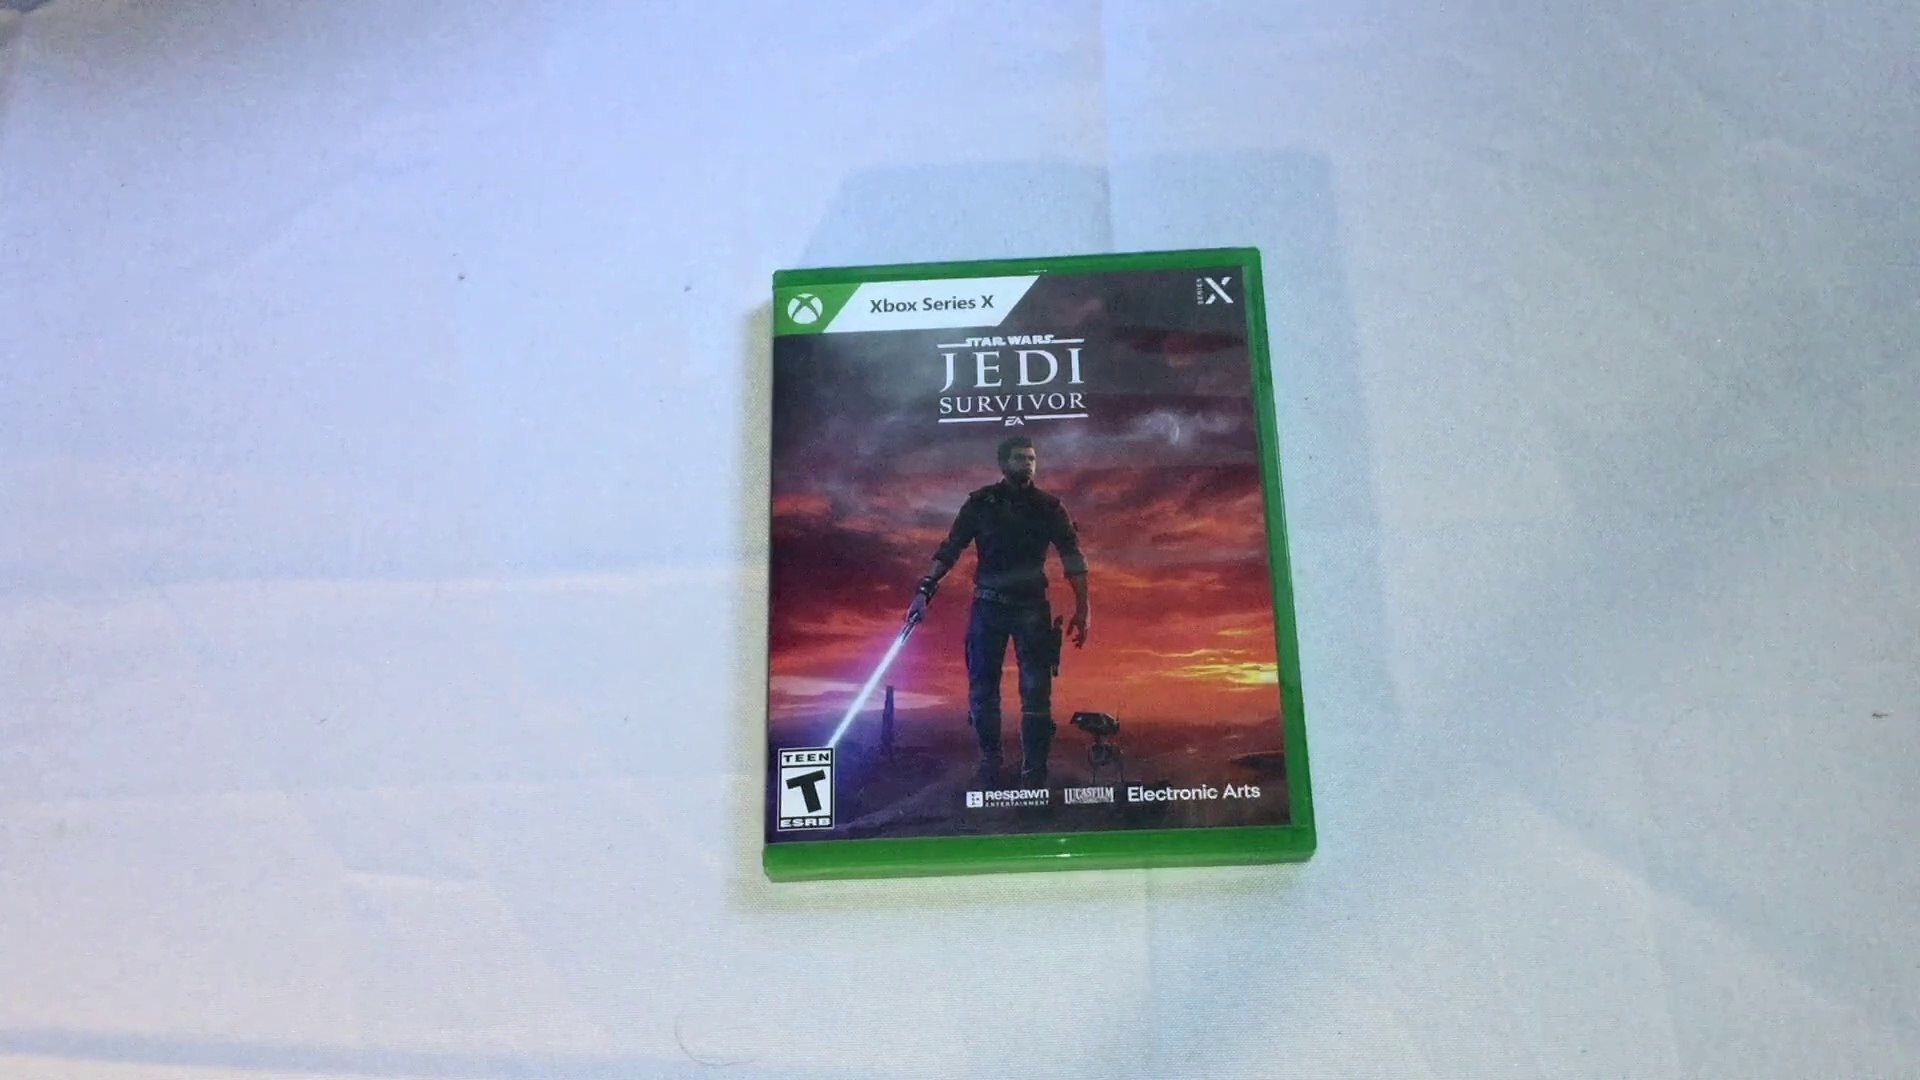 - (Xbox: video Wars Unboxing. Dailymotion X) Survivor Series Jedi: Star